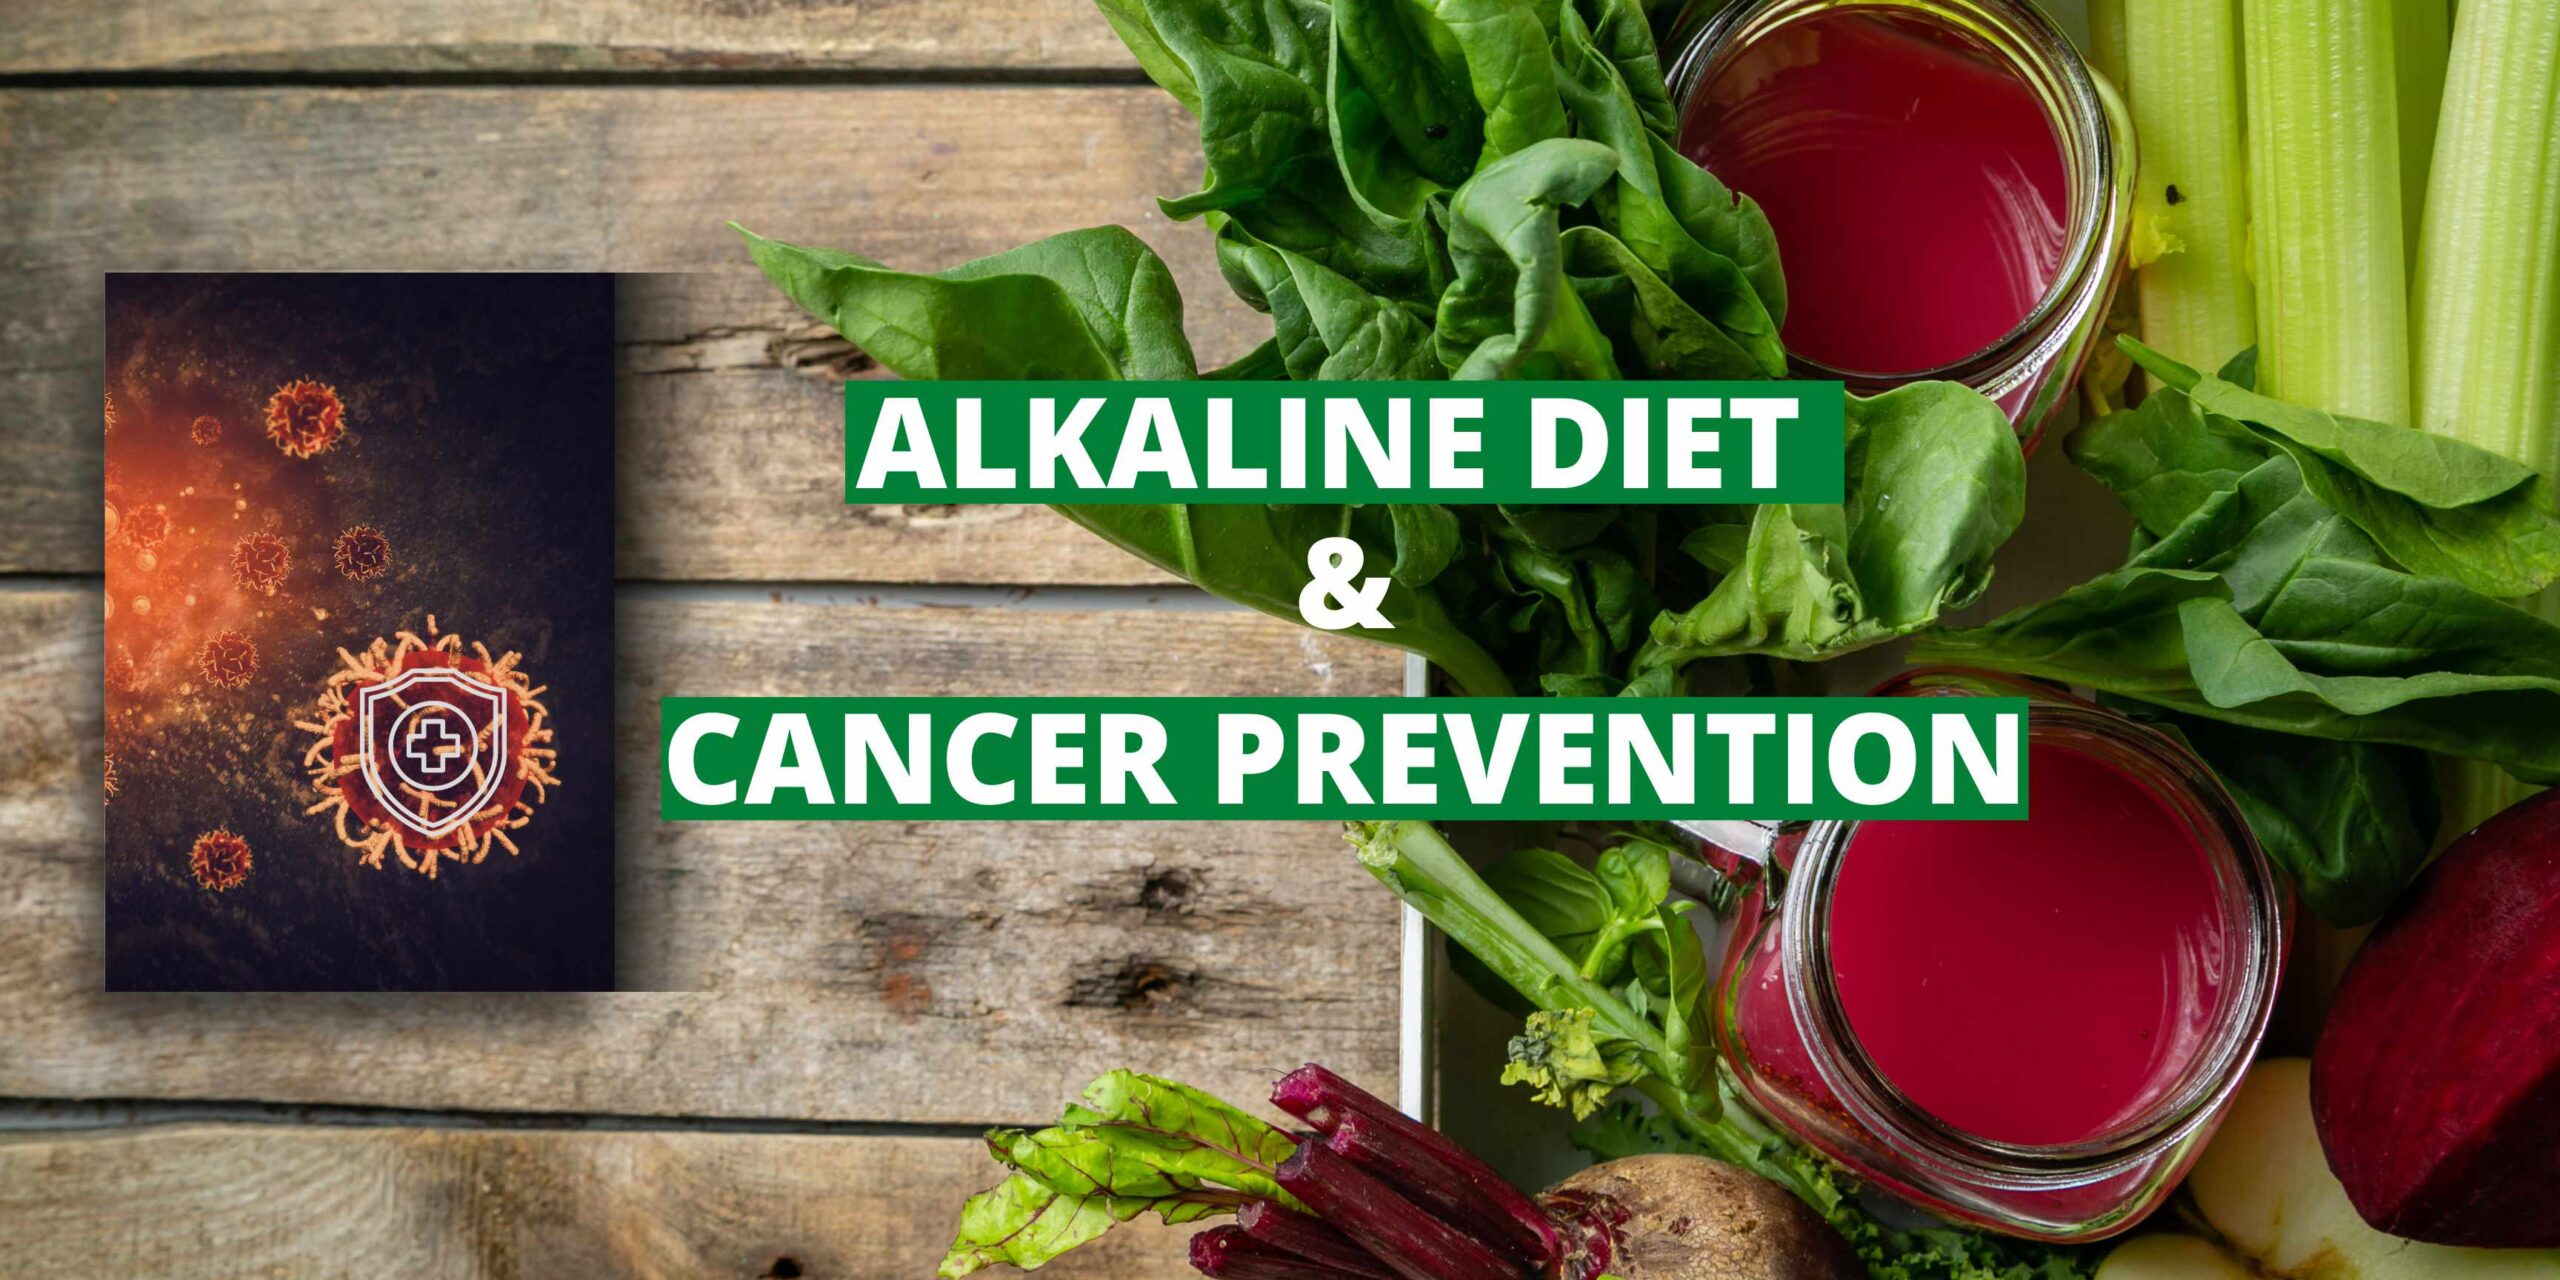 Alkaline Diet and Cancer Prevention by Dr. Nagendra Parvataneni